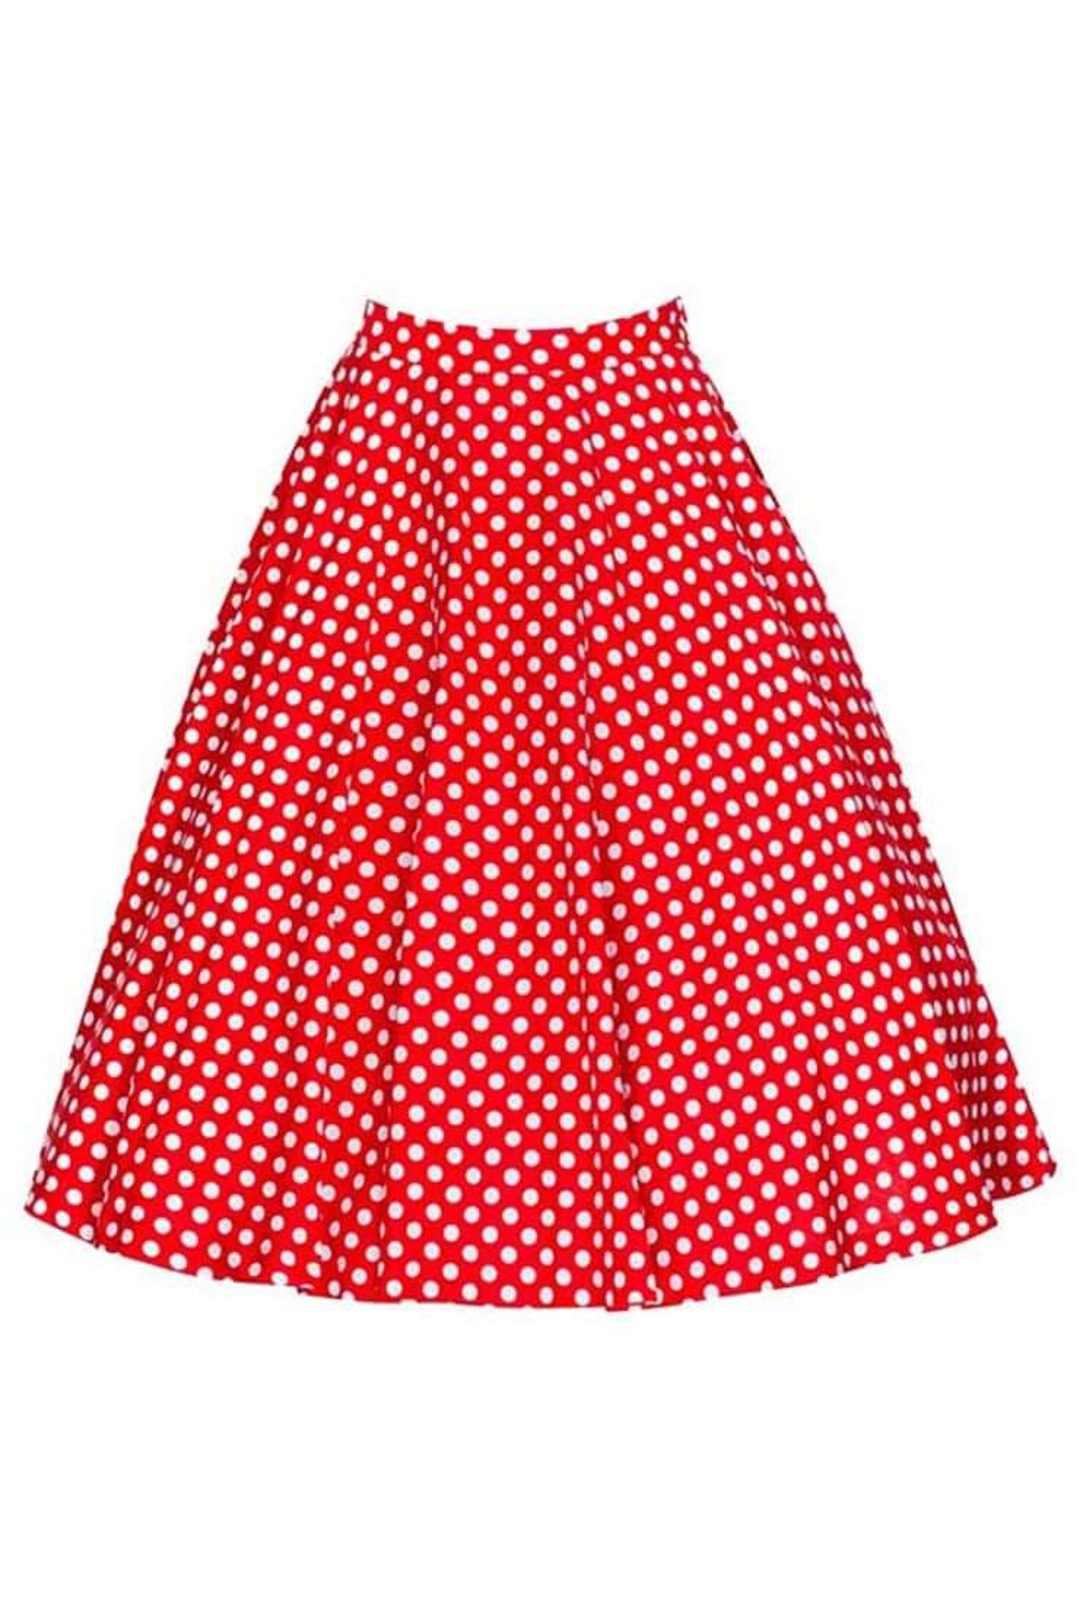 1950's Red Polka Dot Circle Skirt